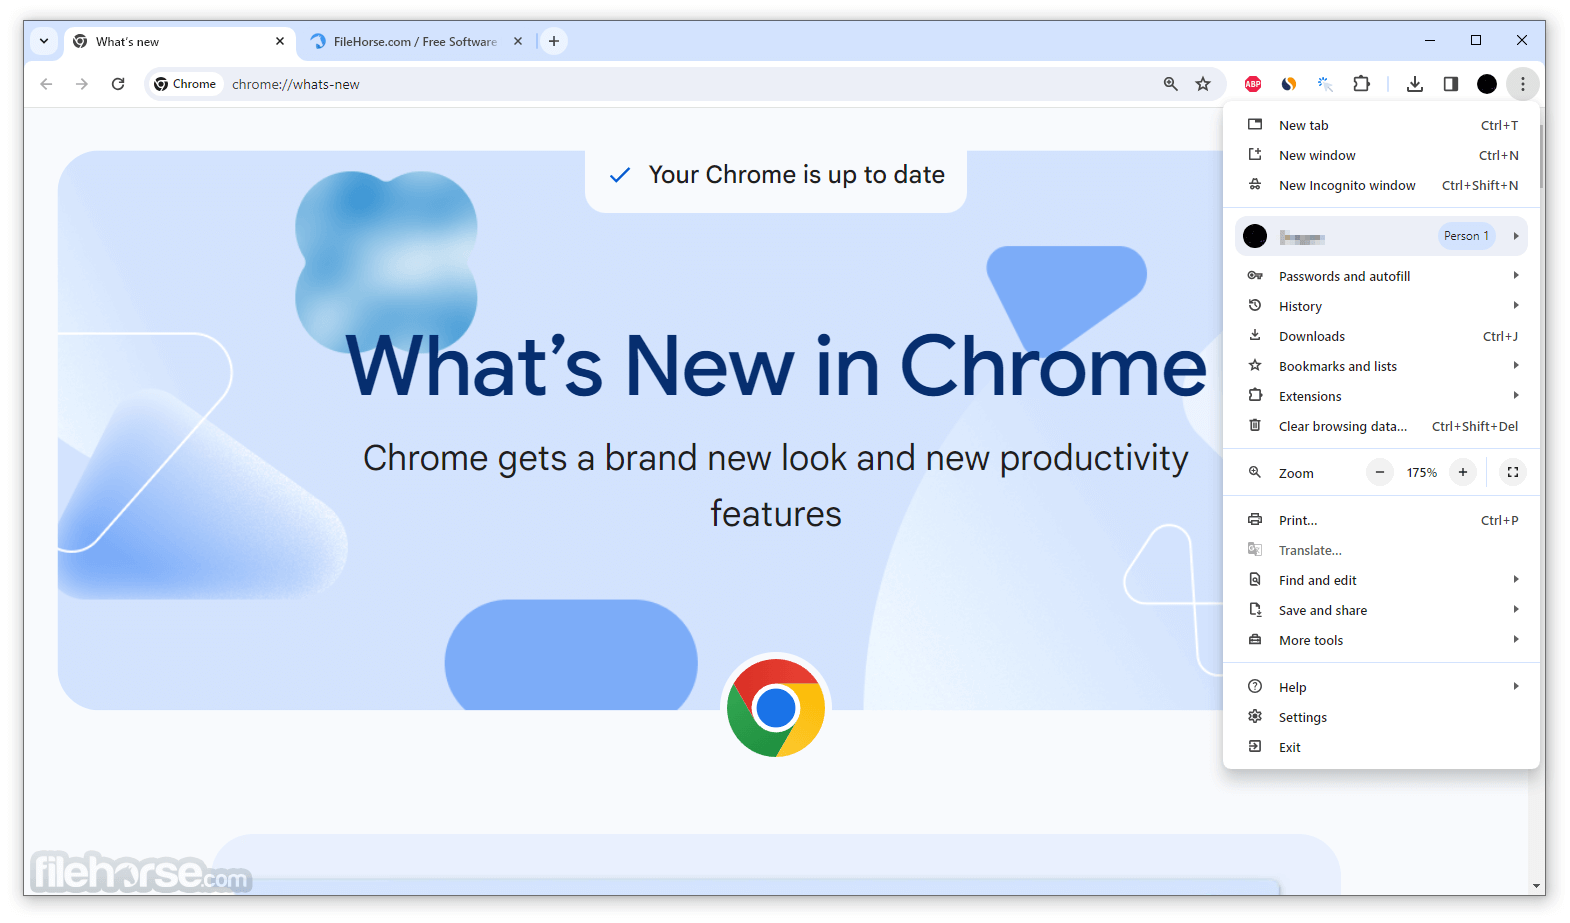 google-chrome-screenshot-02.png